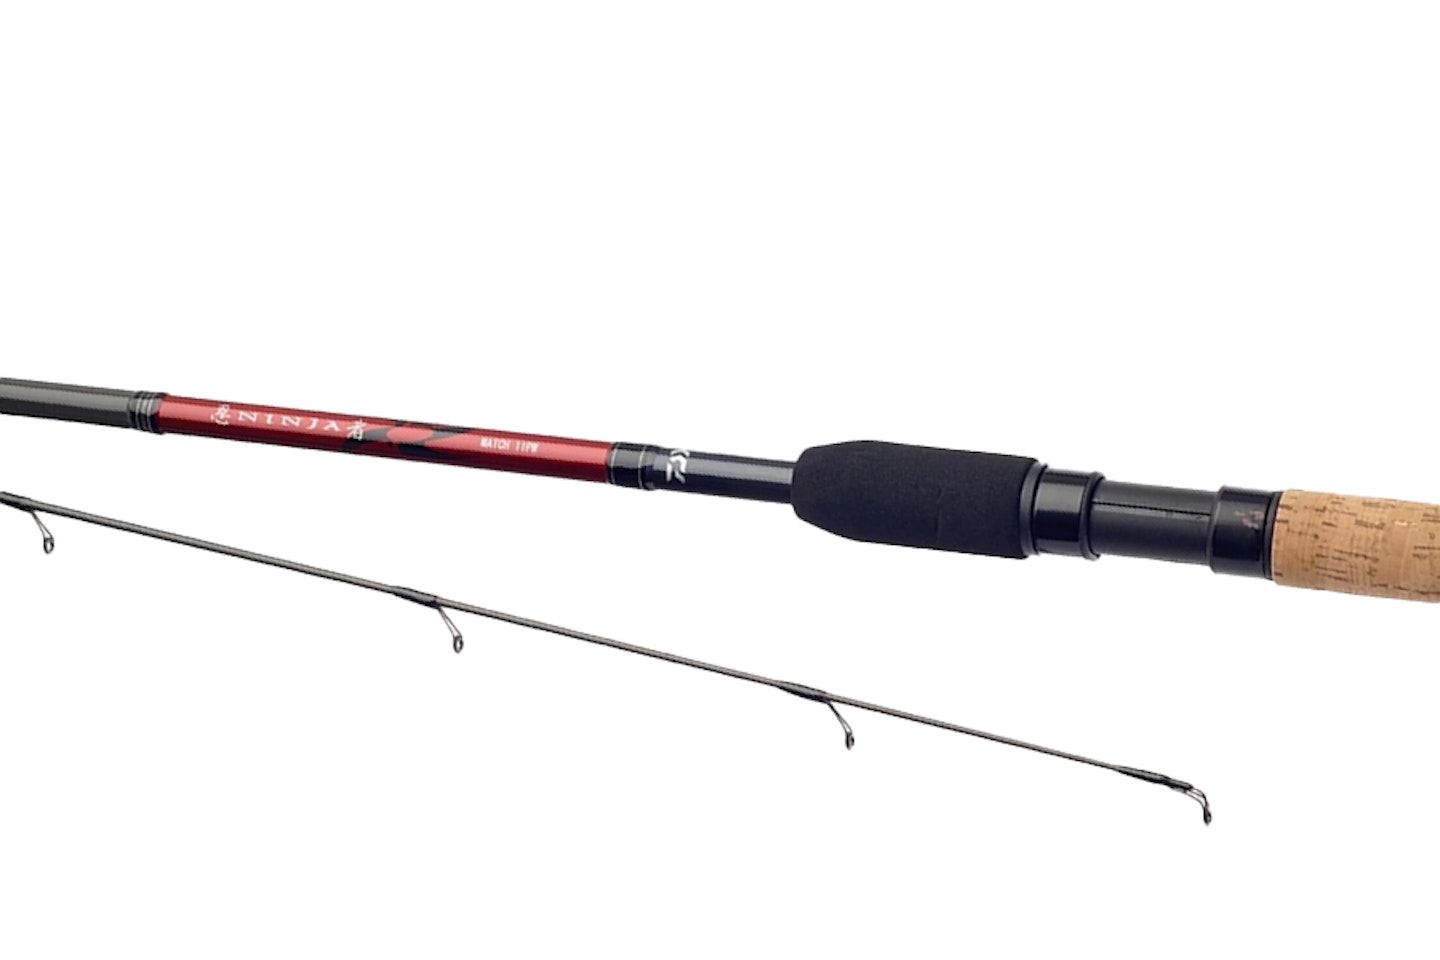 Daiwa Ninja Waggler Rod - Coarse Floating Fishing Rods